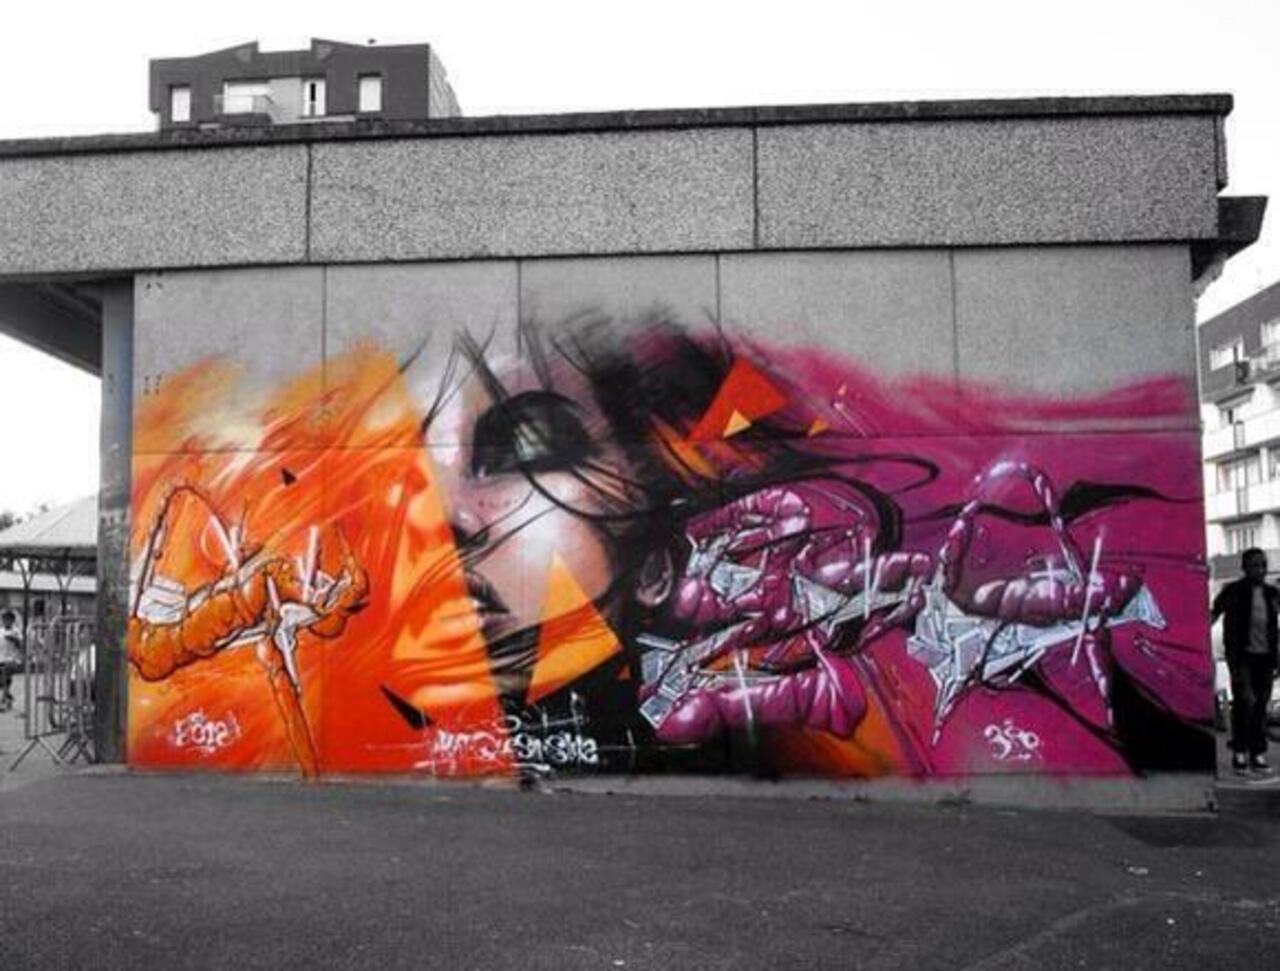 RT @designopinion: Colab of Sly2, Kat, Quesa Street Art wall in Paris, France #art #mural #graffiti #streetart https://t.co/y2QYWVPYfi